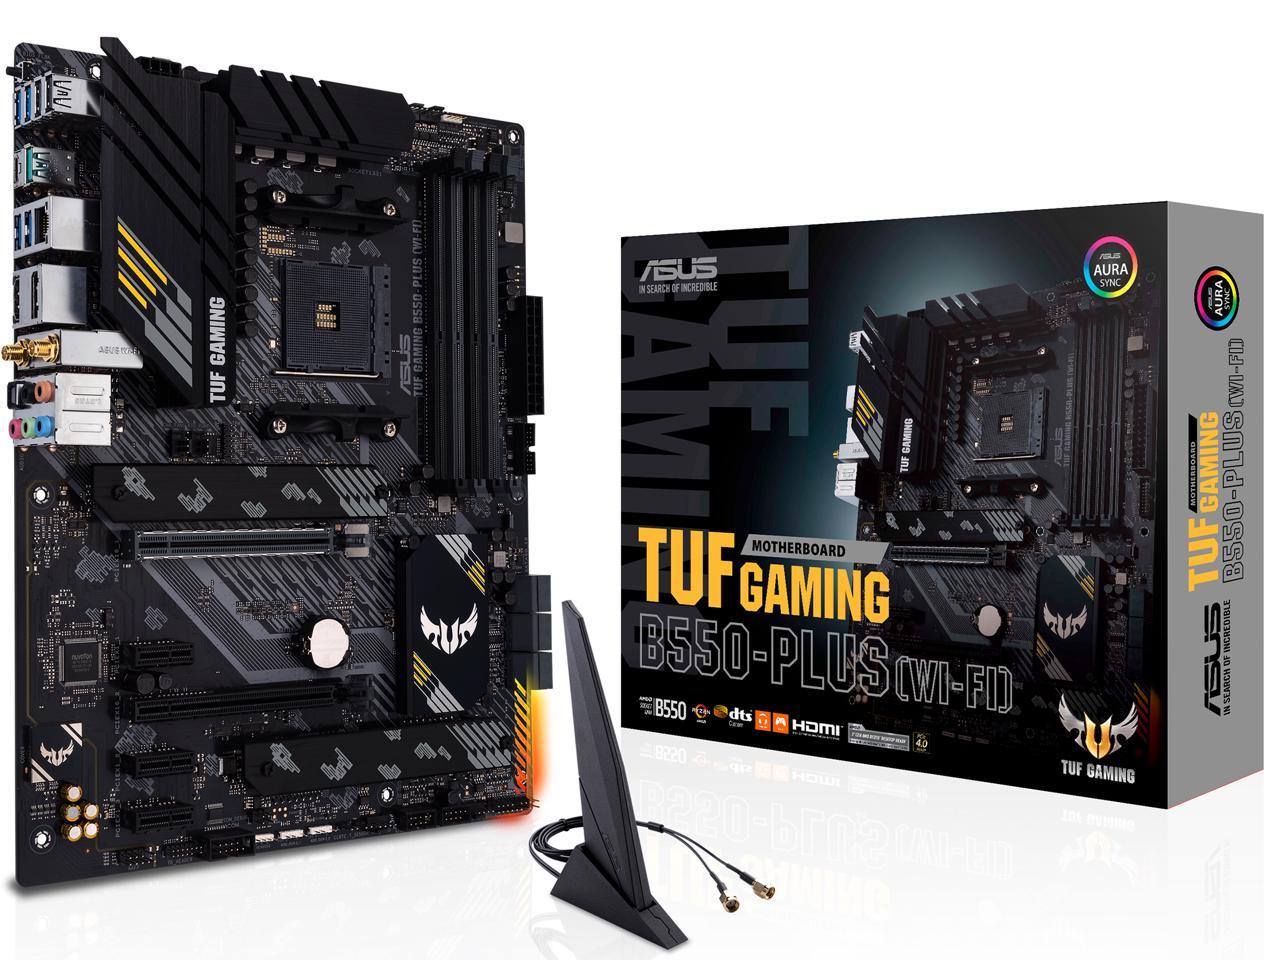 ASUS TUF GAMING B550-PLUS (WI-FI) AM4 ATX AMD Motherboard - Newegg.com